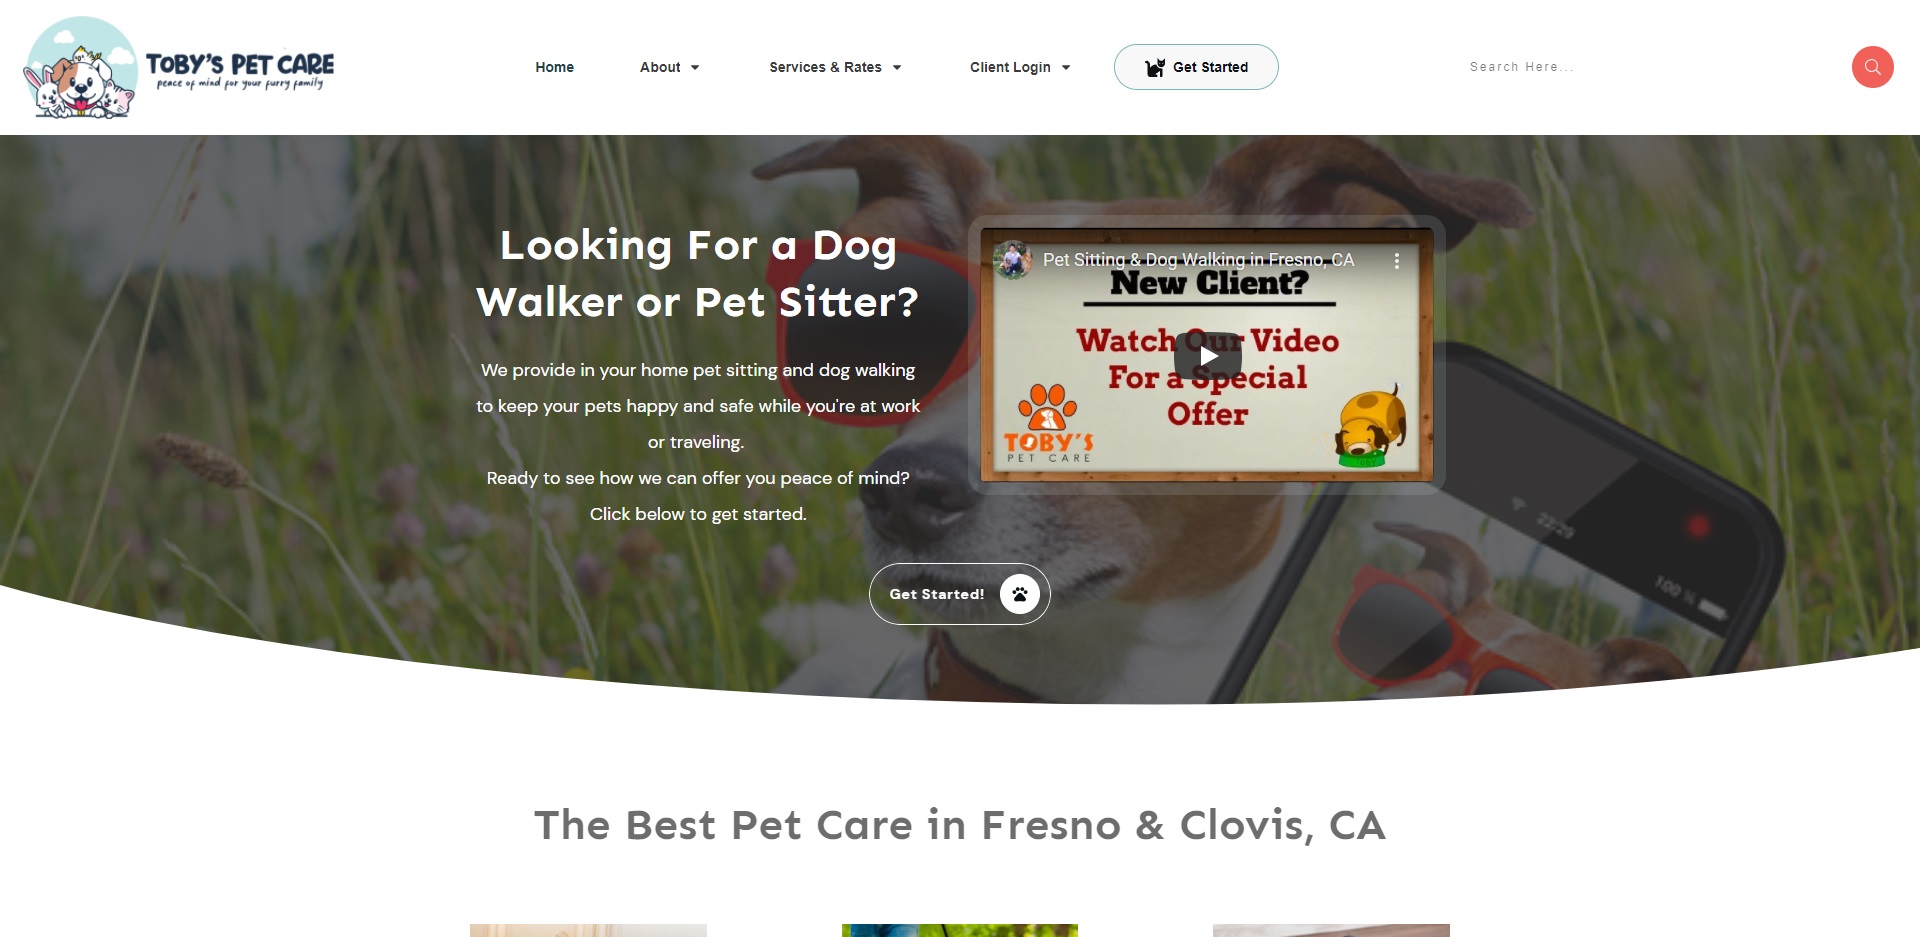 The Best Pet Care Center in Fresno, CA